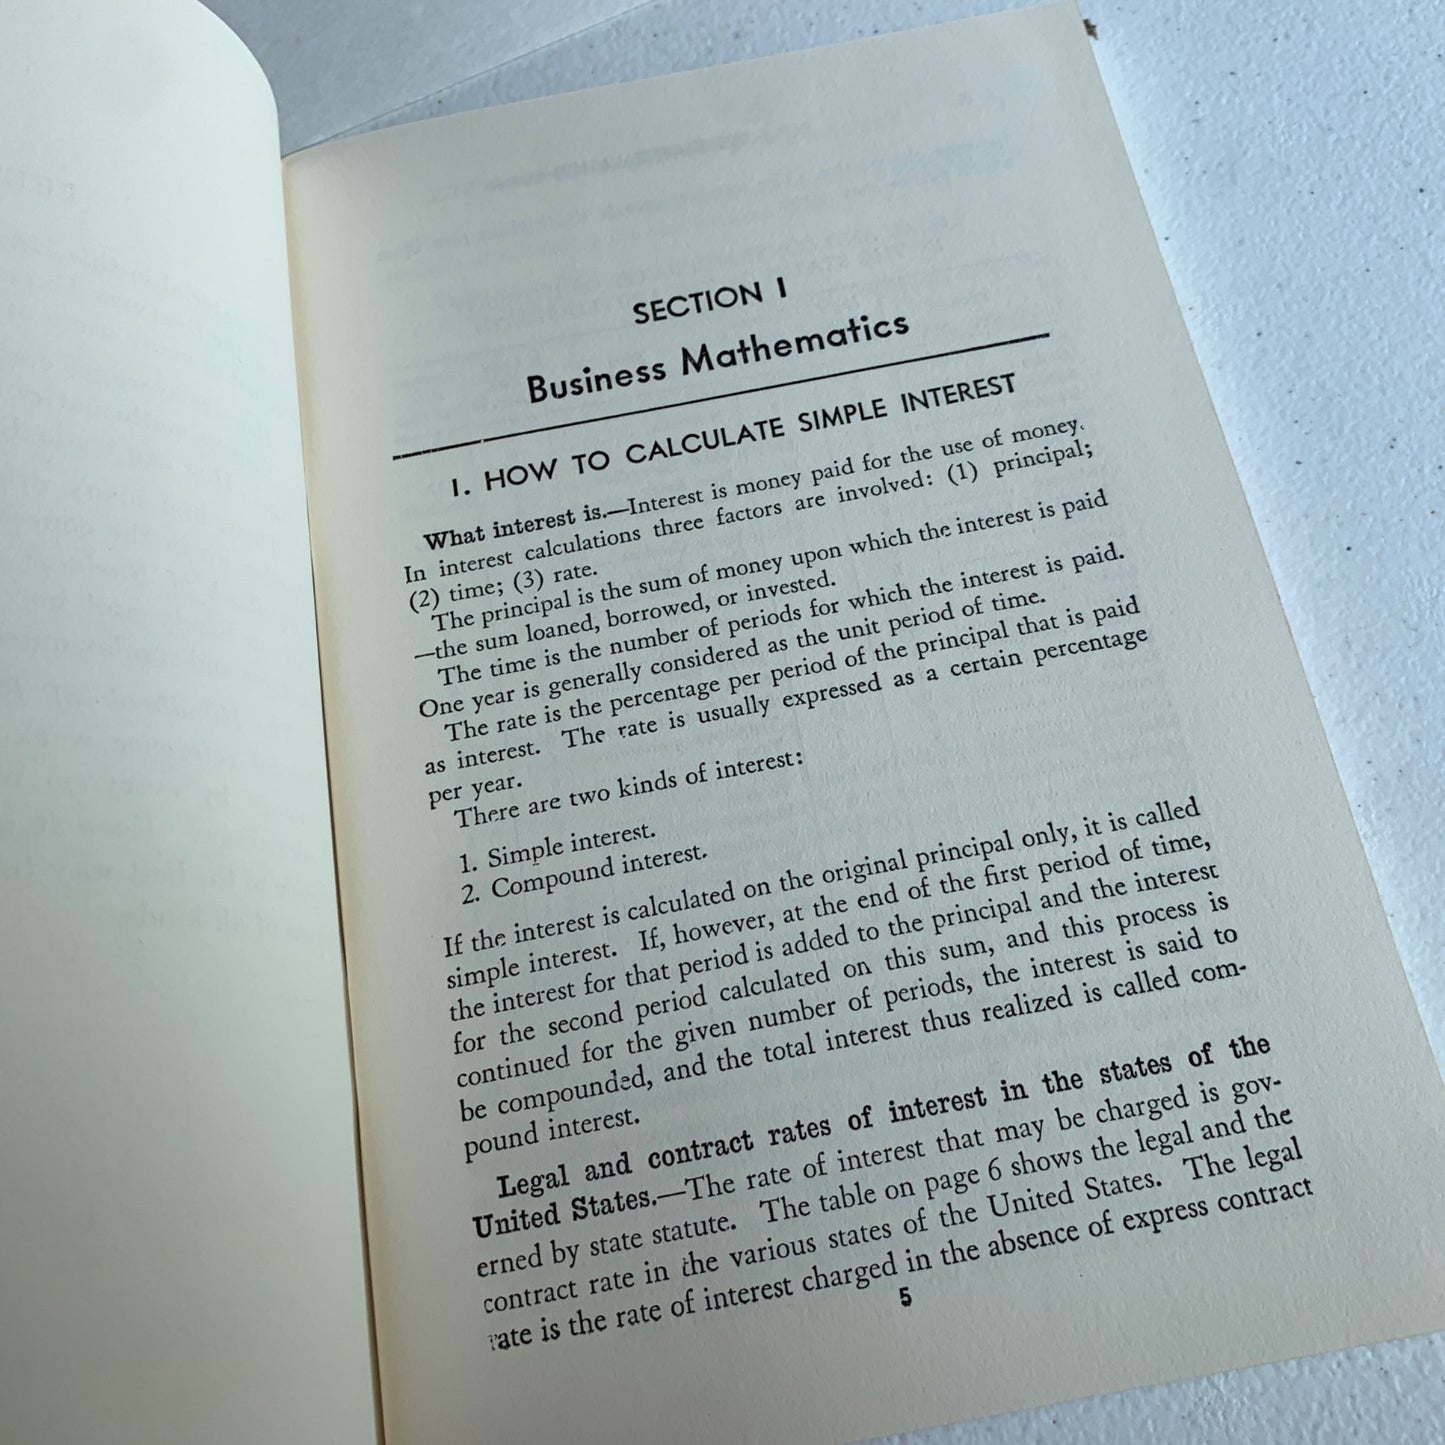 Handbook of Business Mathematics 1959 Book Vintage